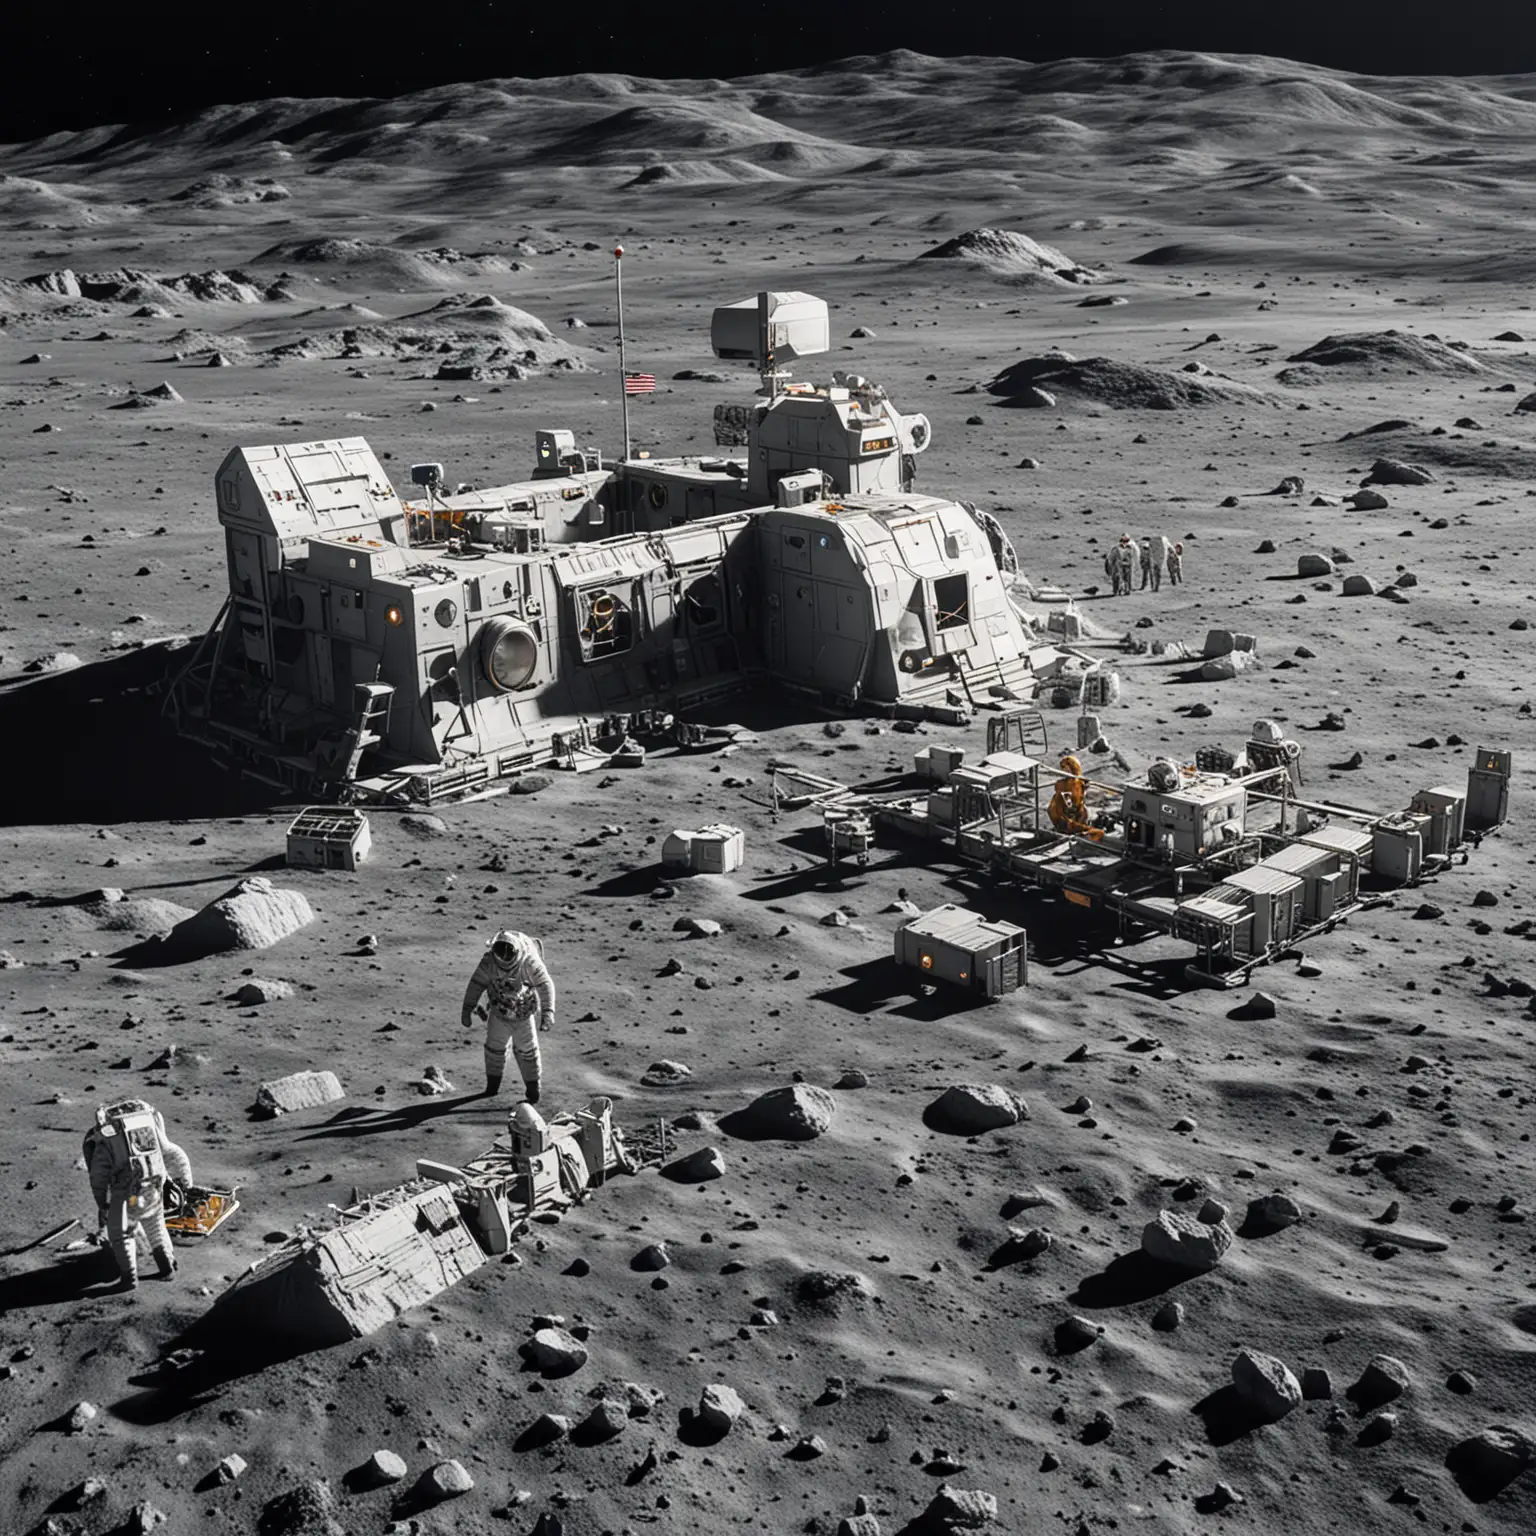 Moon Base Futuristic Lunar Colony with Advanced Technology